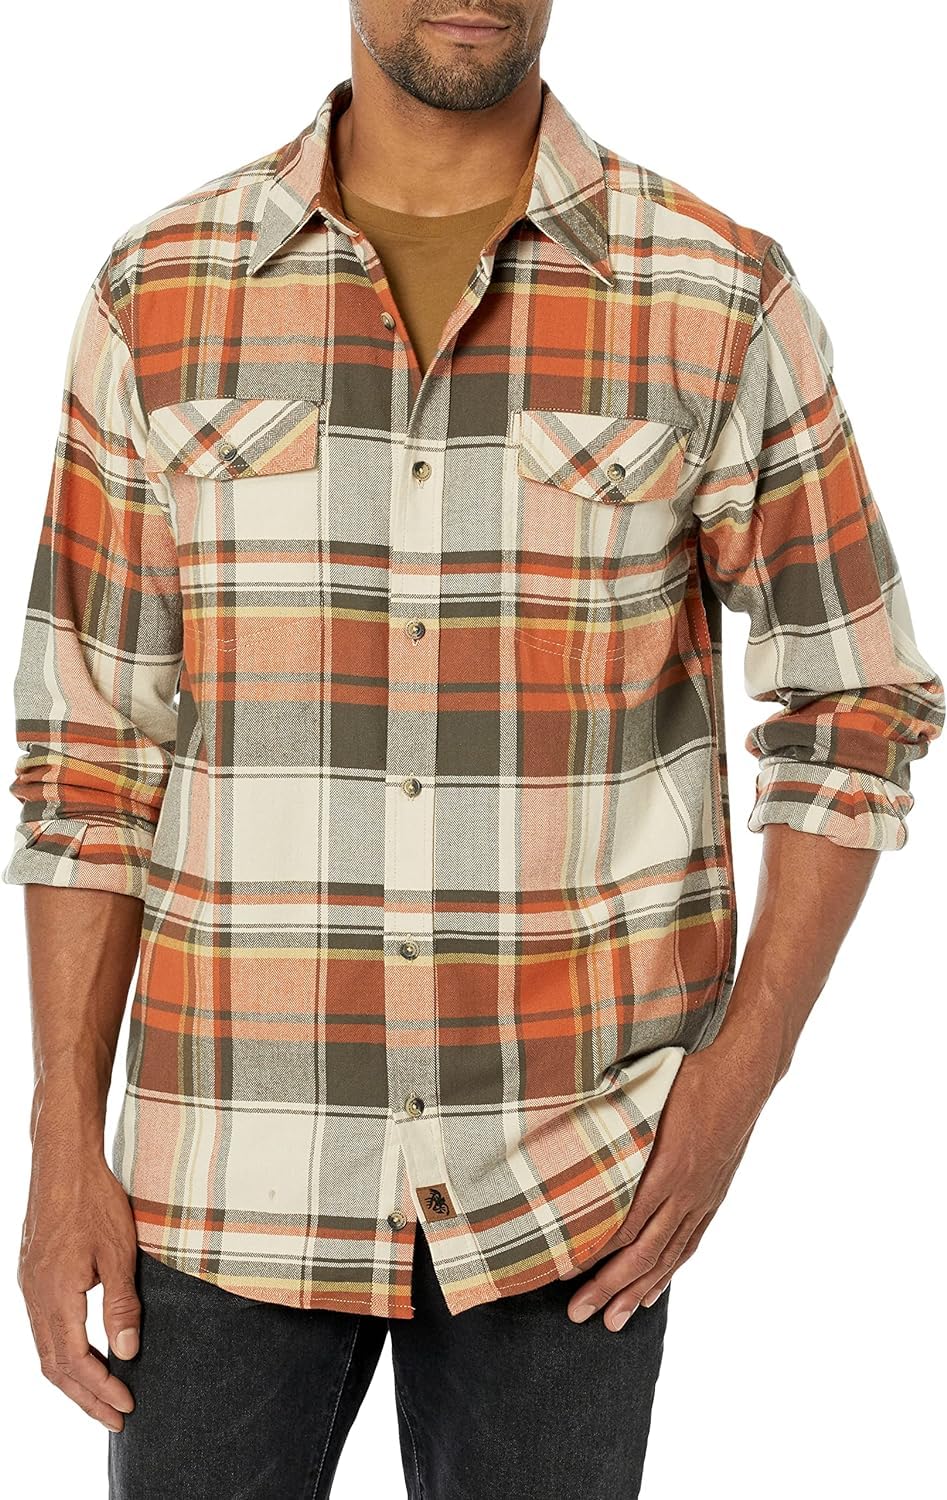 Legendary Whitetails Men's Legendary Flannel Shirt, Dark Horizon Plaid, Small